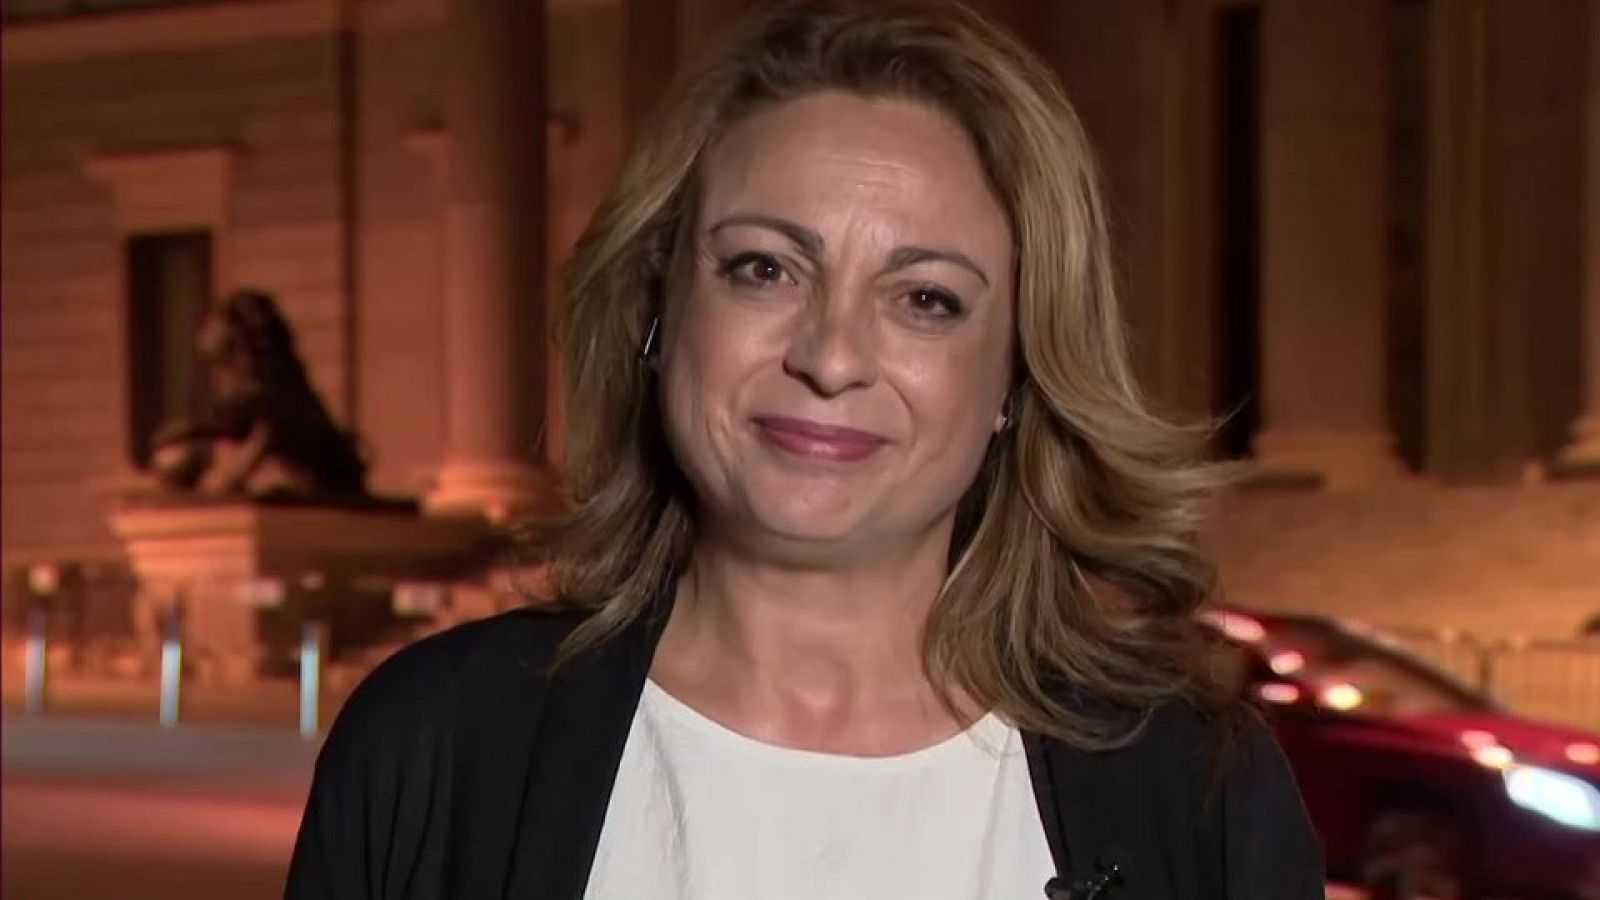 Entrevista en La Noche en 24 Horas a Cristina Valido, diputada de Coalición Canaria